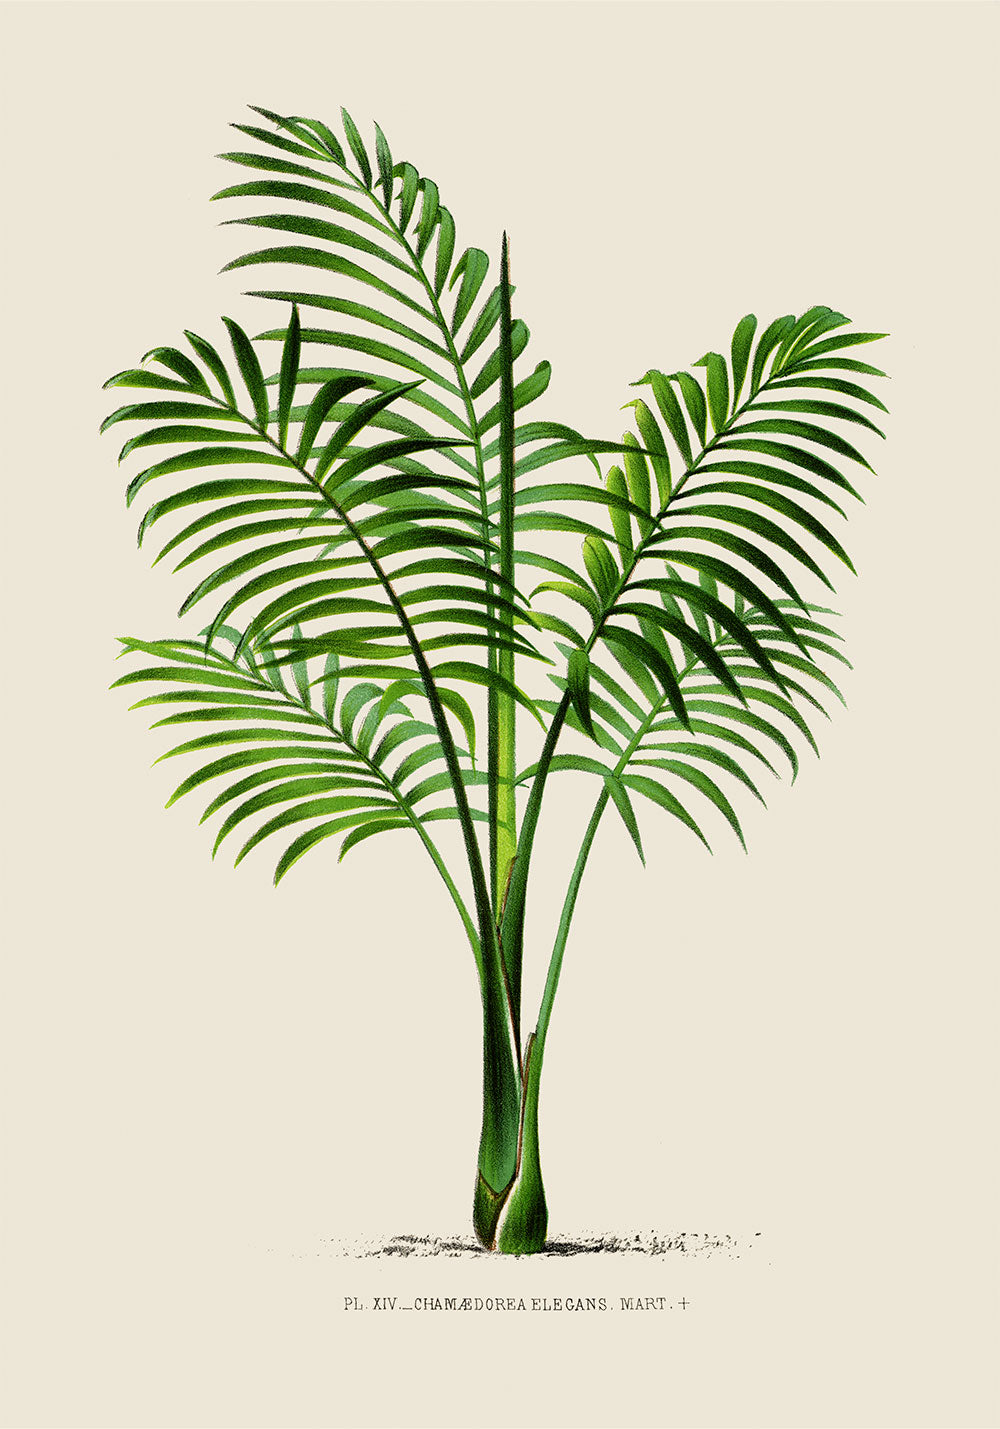 Chamaedorea elegans Palm Tree Art Print by Pieter Joseph de Pannemaeker